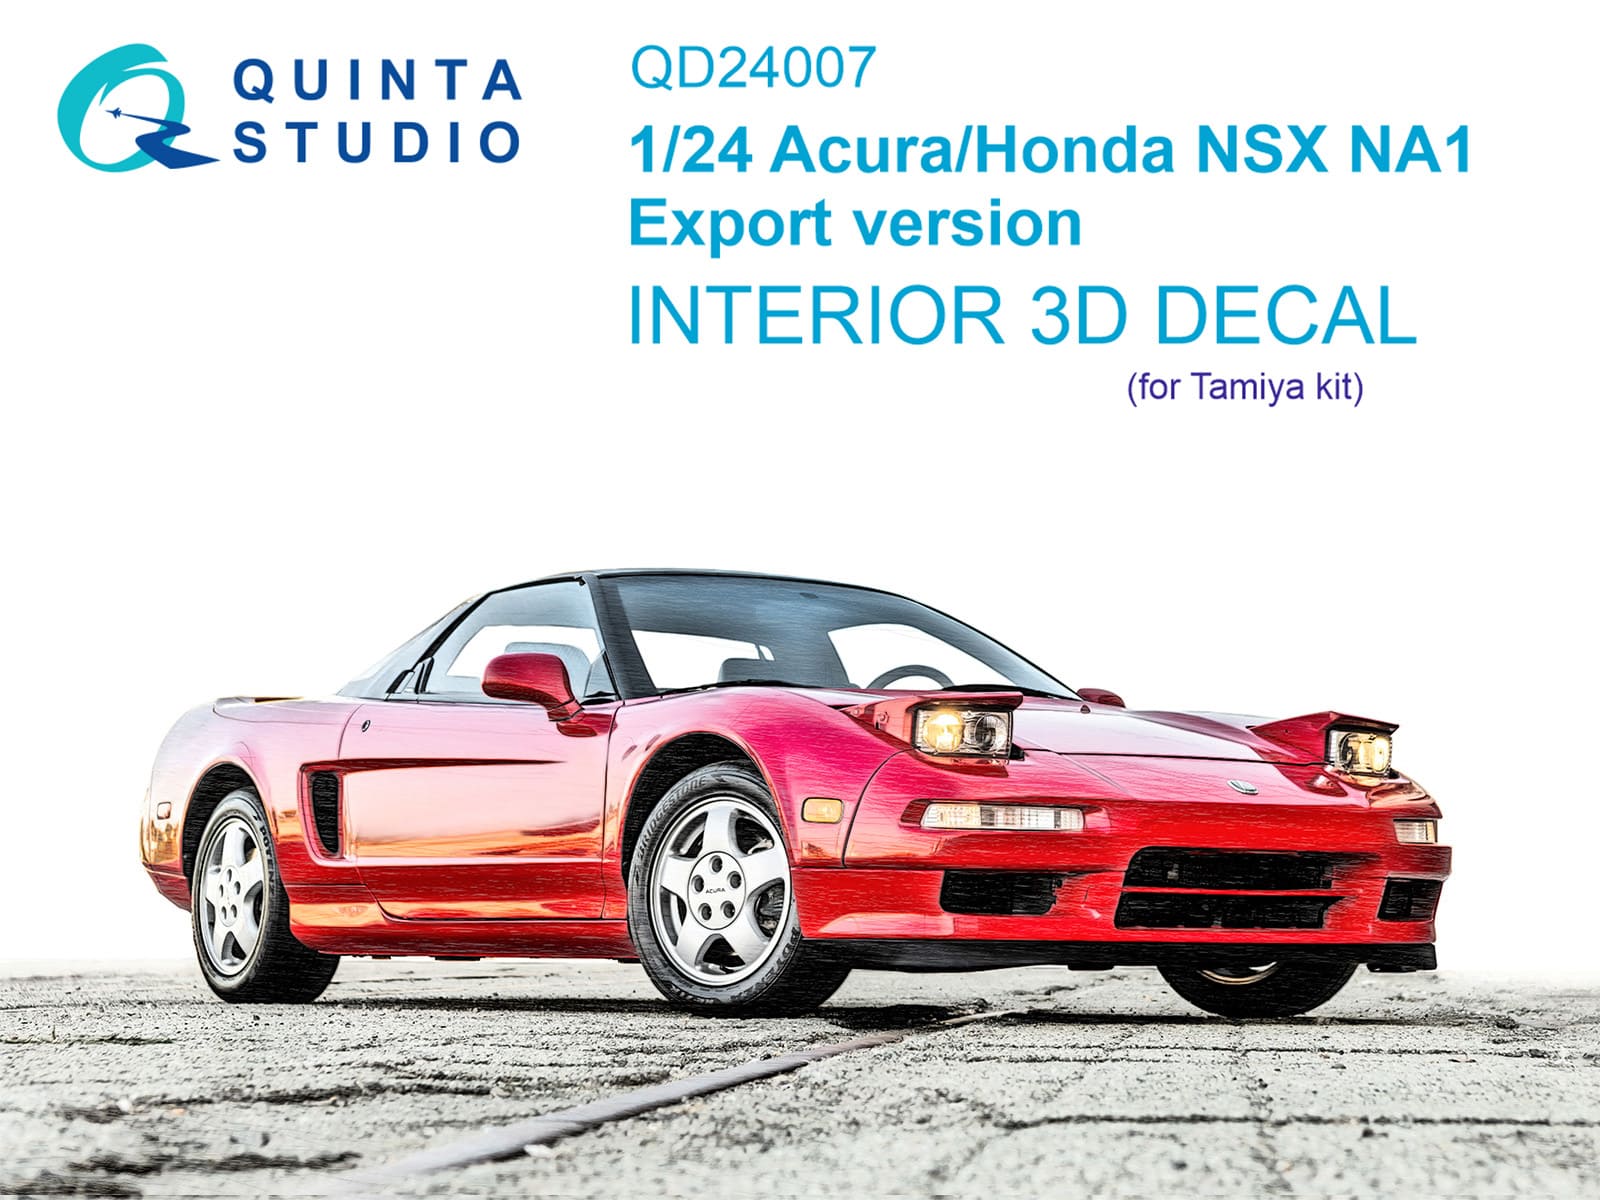 QD24007  декали  3D Декаль интерьера кабины Acura-Honda NSX NA1 Export version (Tamiya)  (1:24)